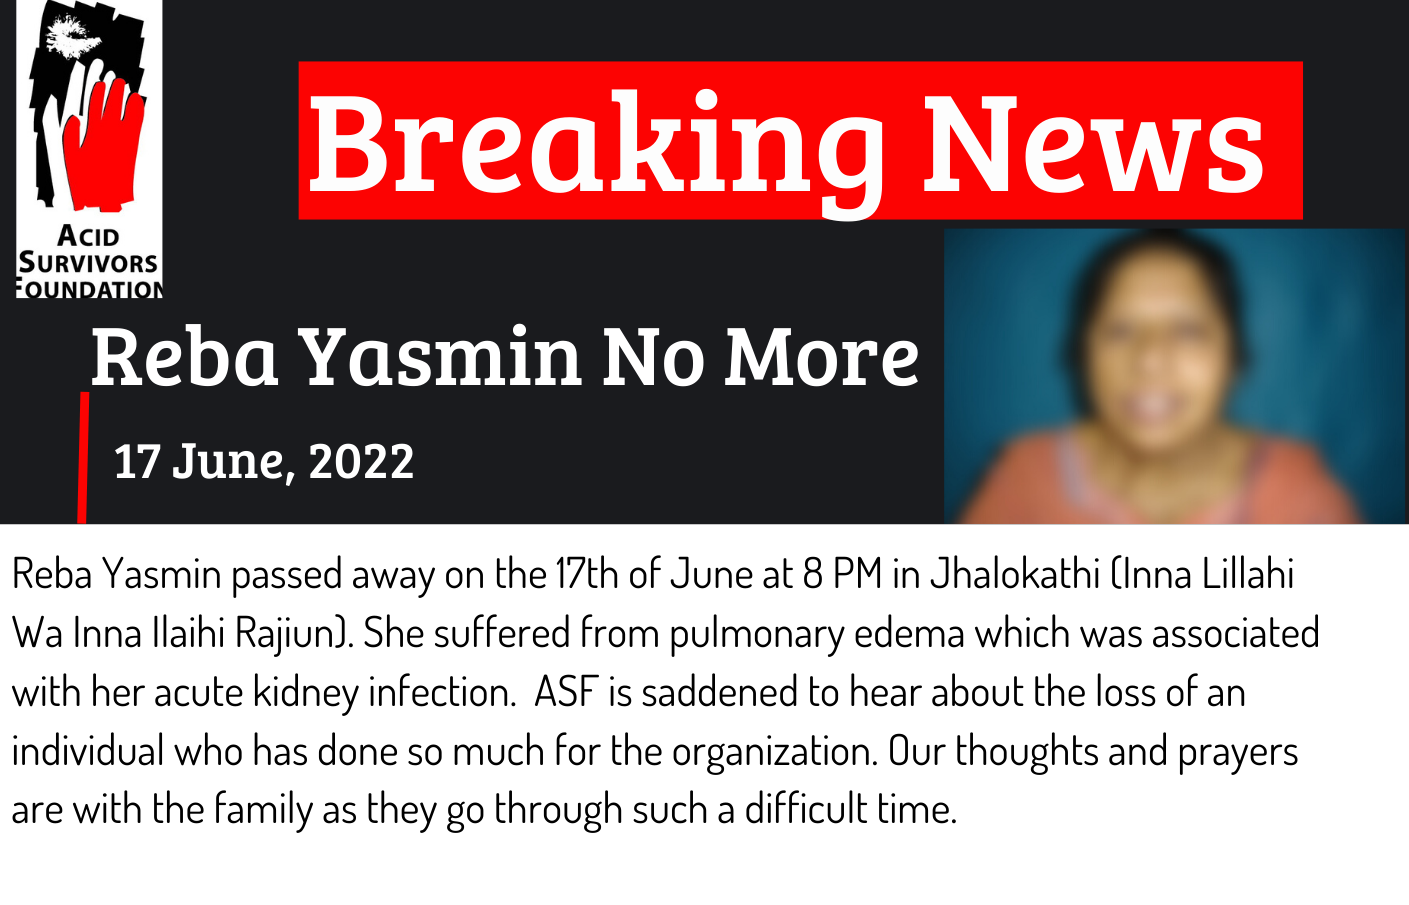 Reba Yasmin is no more